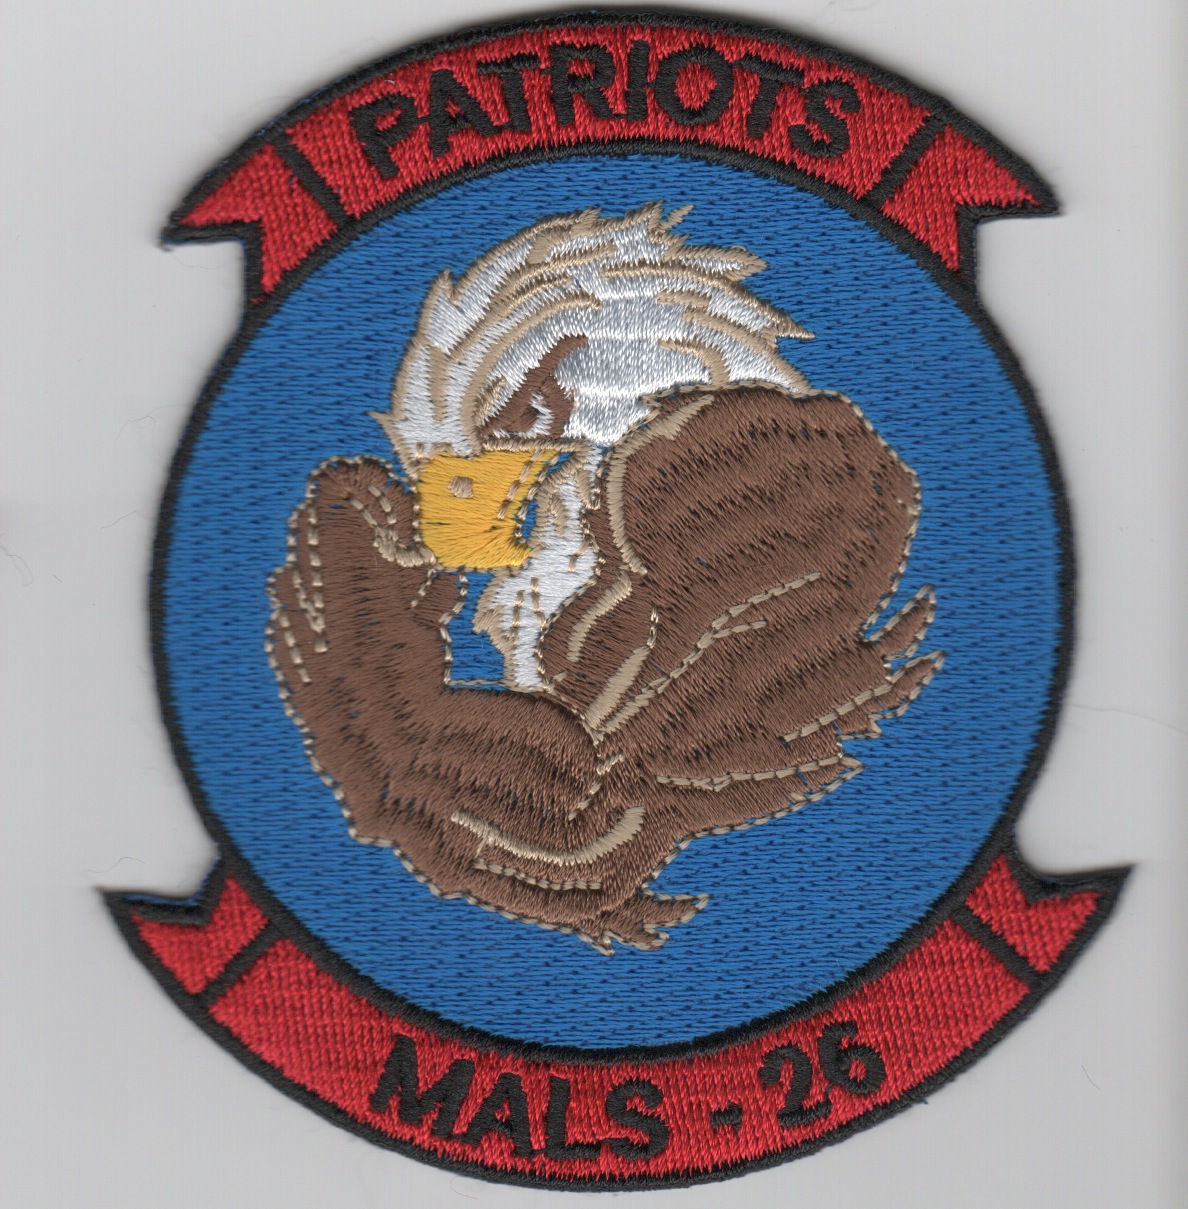 MALS-26 Squadron Patch